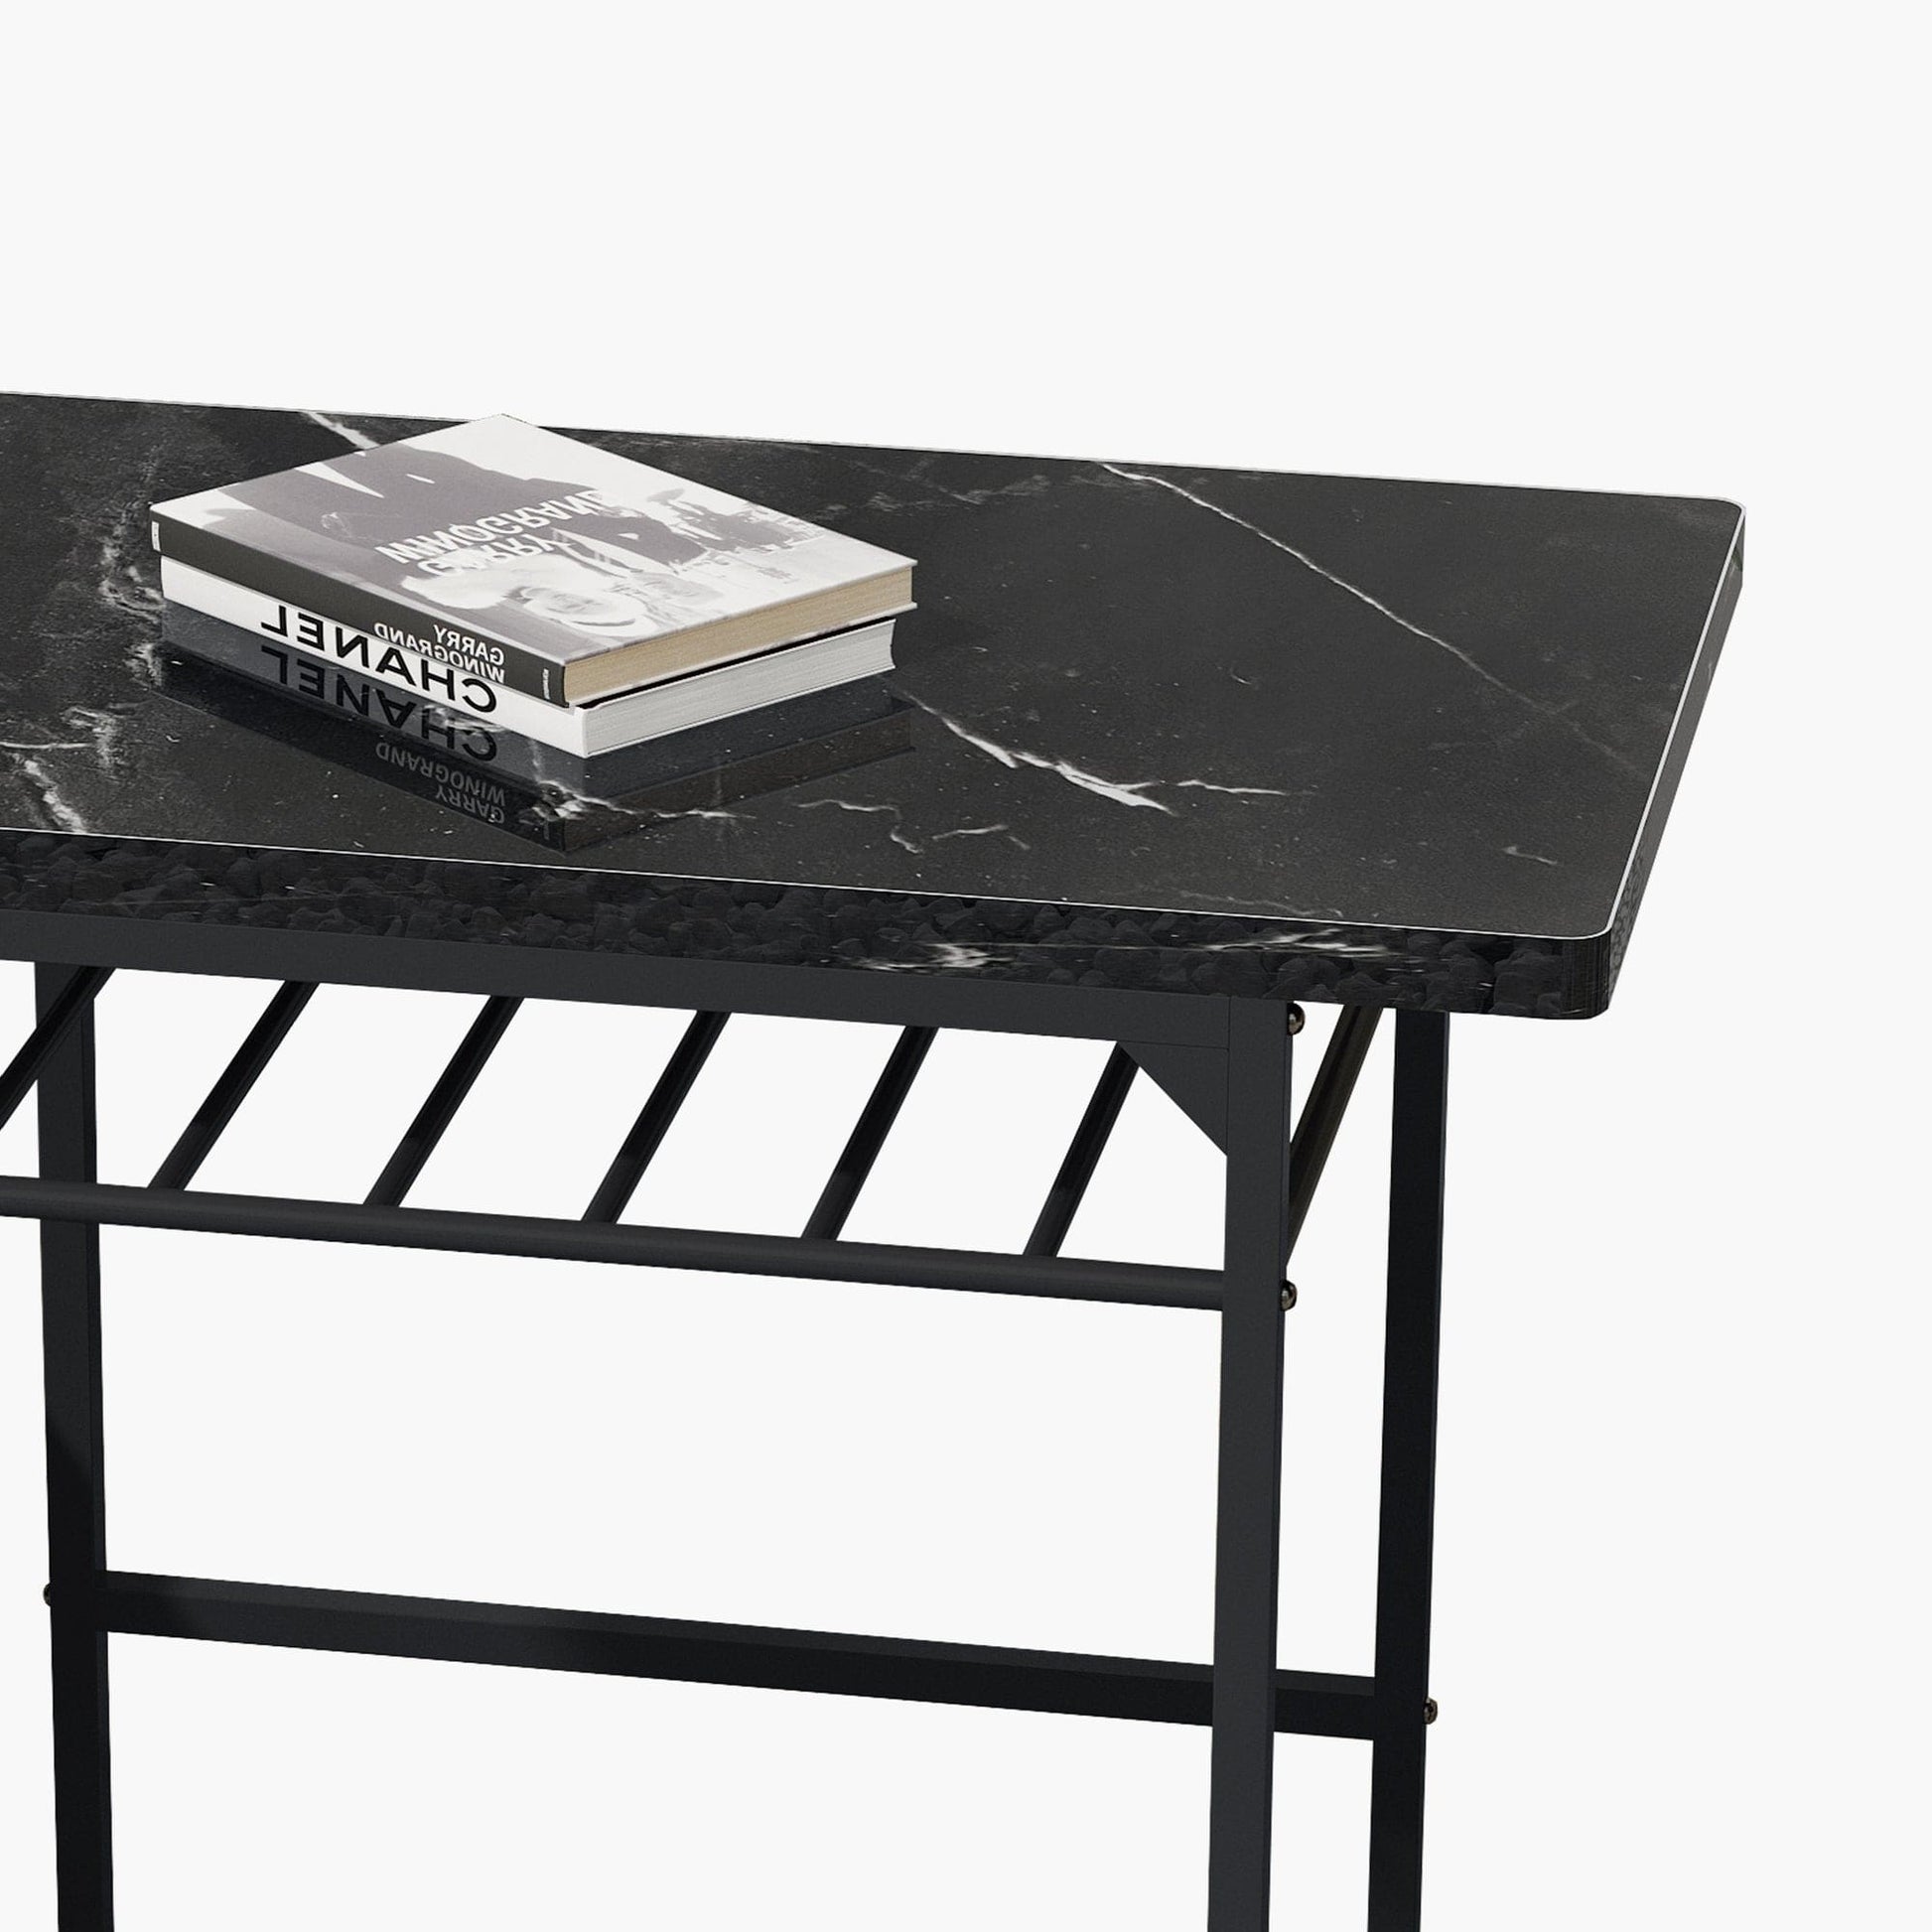 1st Choice Furniture Direct Bar Table Set 1st Choice Black Frame+Printed Marble Finish Elegant Dining Table Set